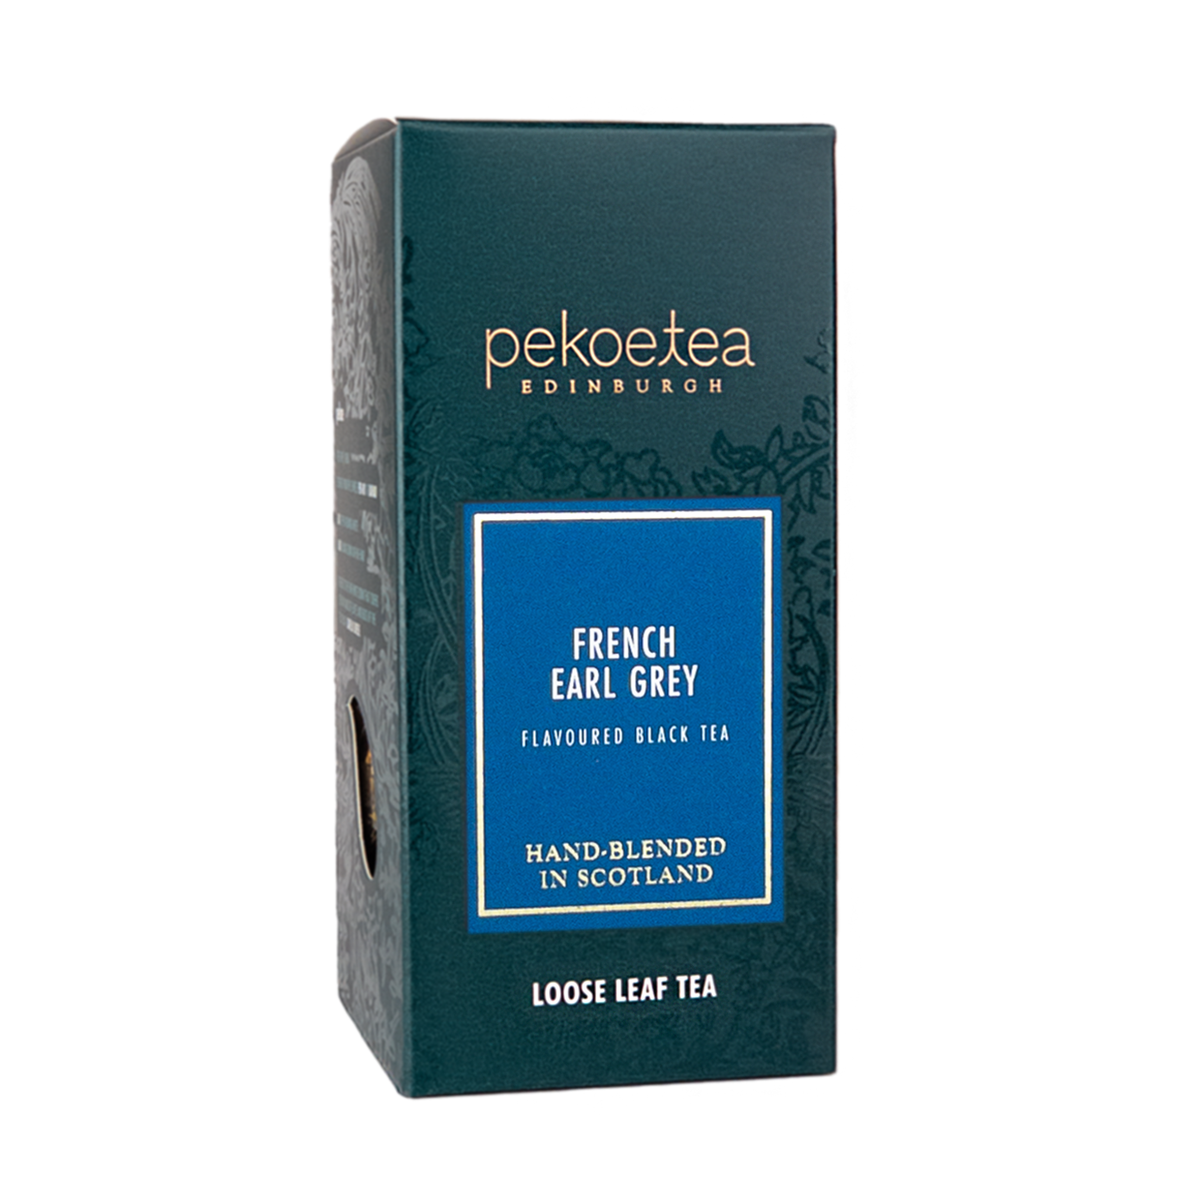 PekoeTea Edinburgh hand blended in Scotland French Earl Grey Flavoured Loose Leaf Tea in a box